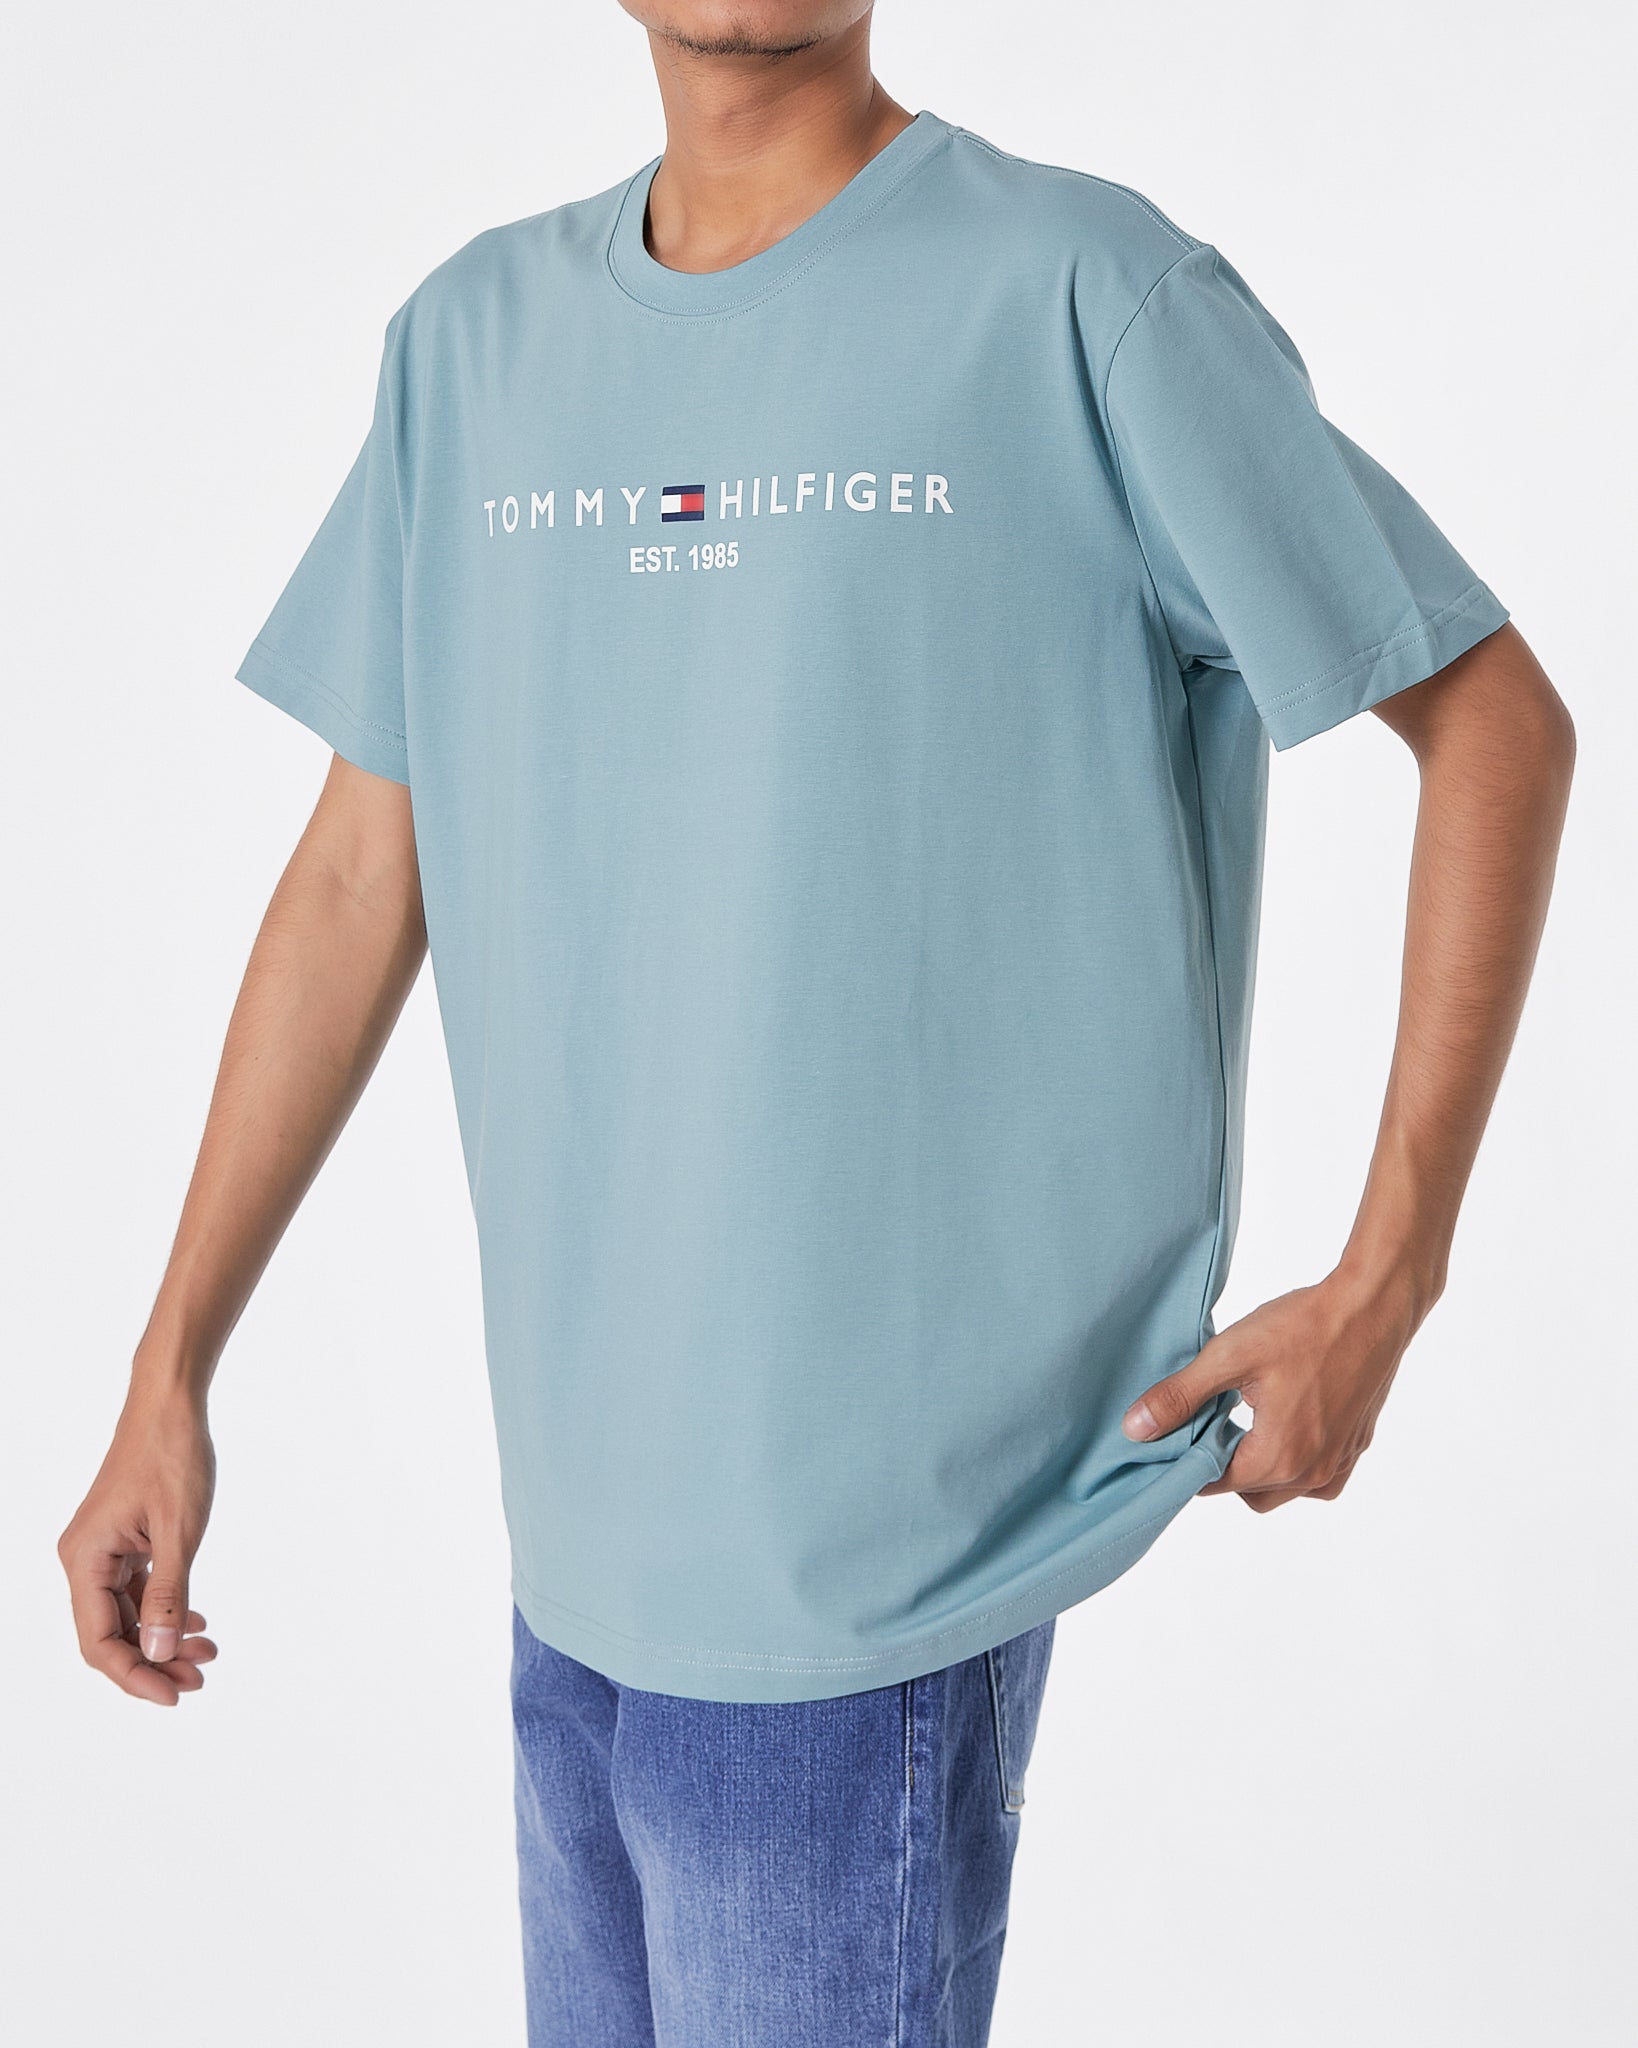 TH Logo Printed Men Light Blue T-Shirt 14.90